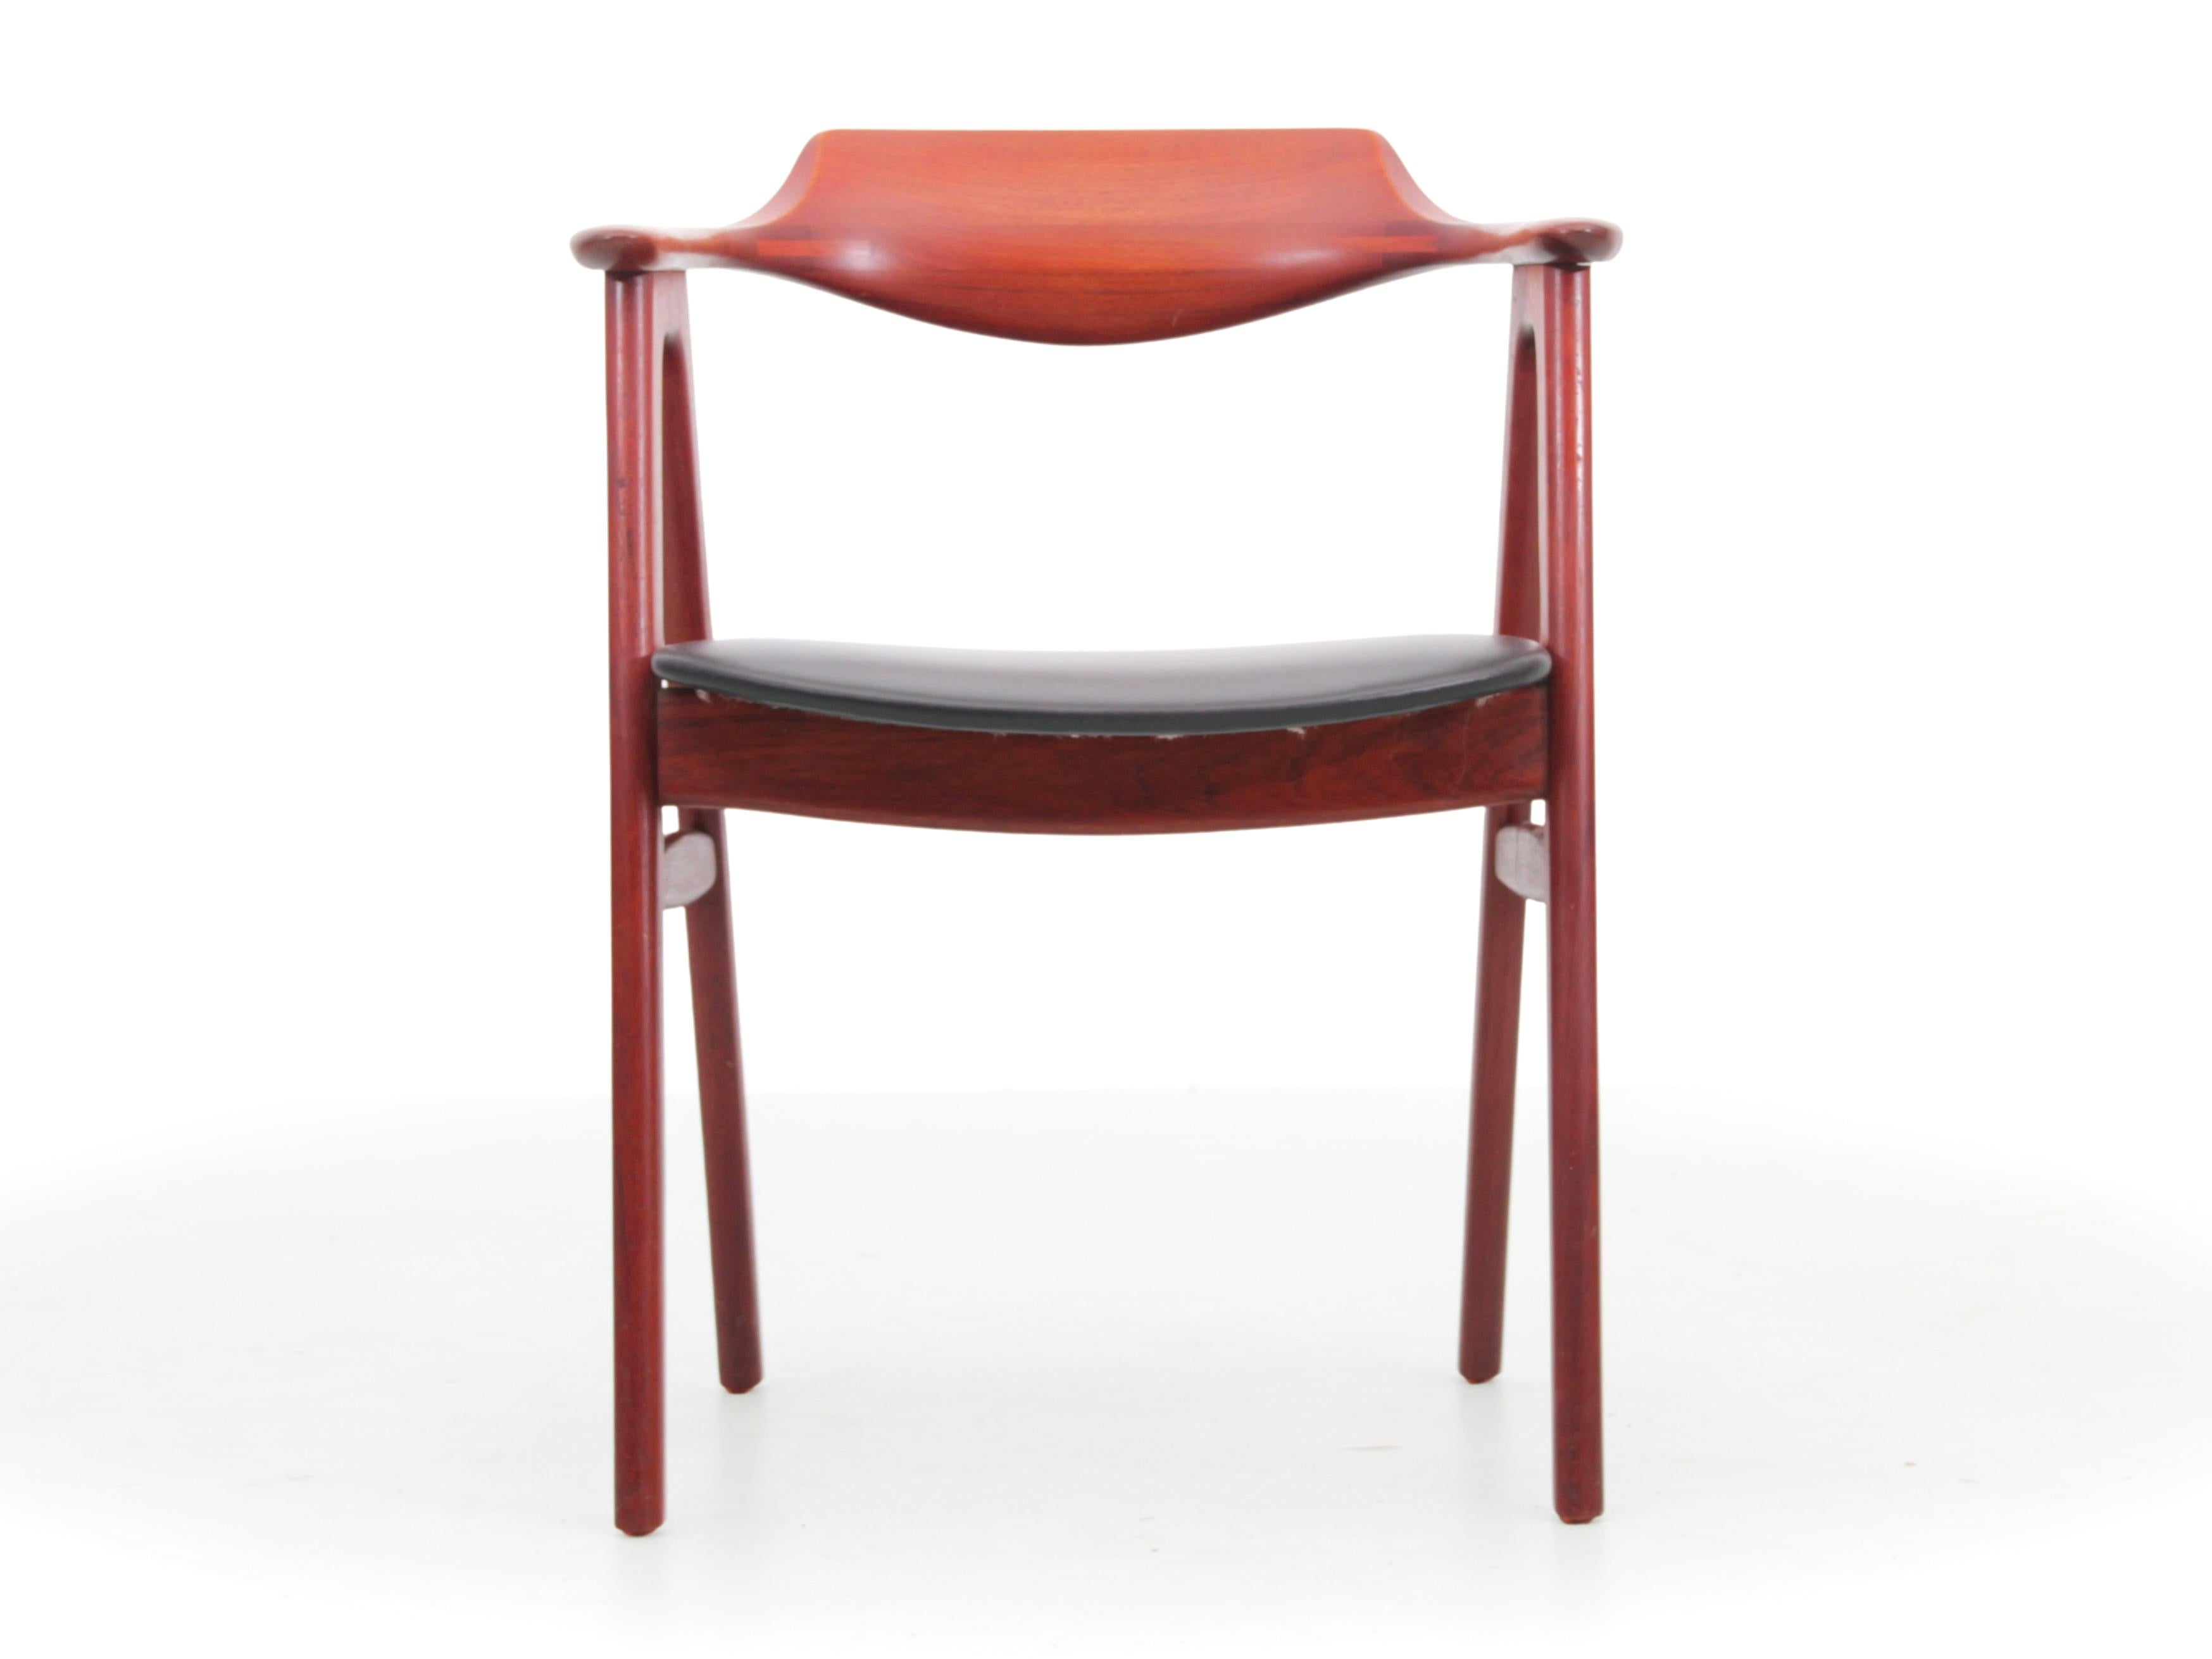 Mid-Century modern Scandinavian teak armchair, by Erik Kirkegaard. New leather seat.

Height : 73 cm. Seat height : 44 cm. Width : 57 cm. Depth : 56 cm. Arm height : 68 cm
